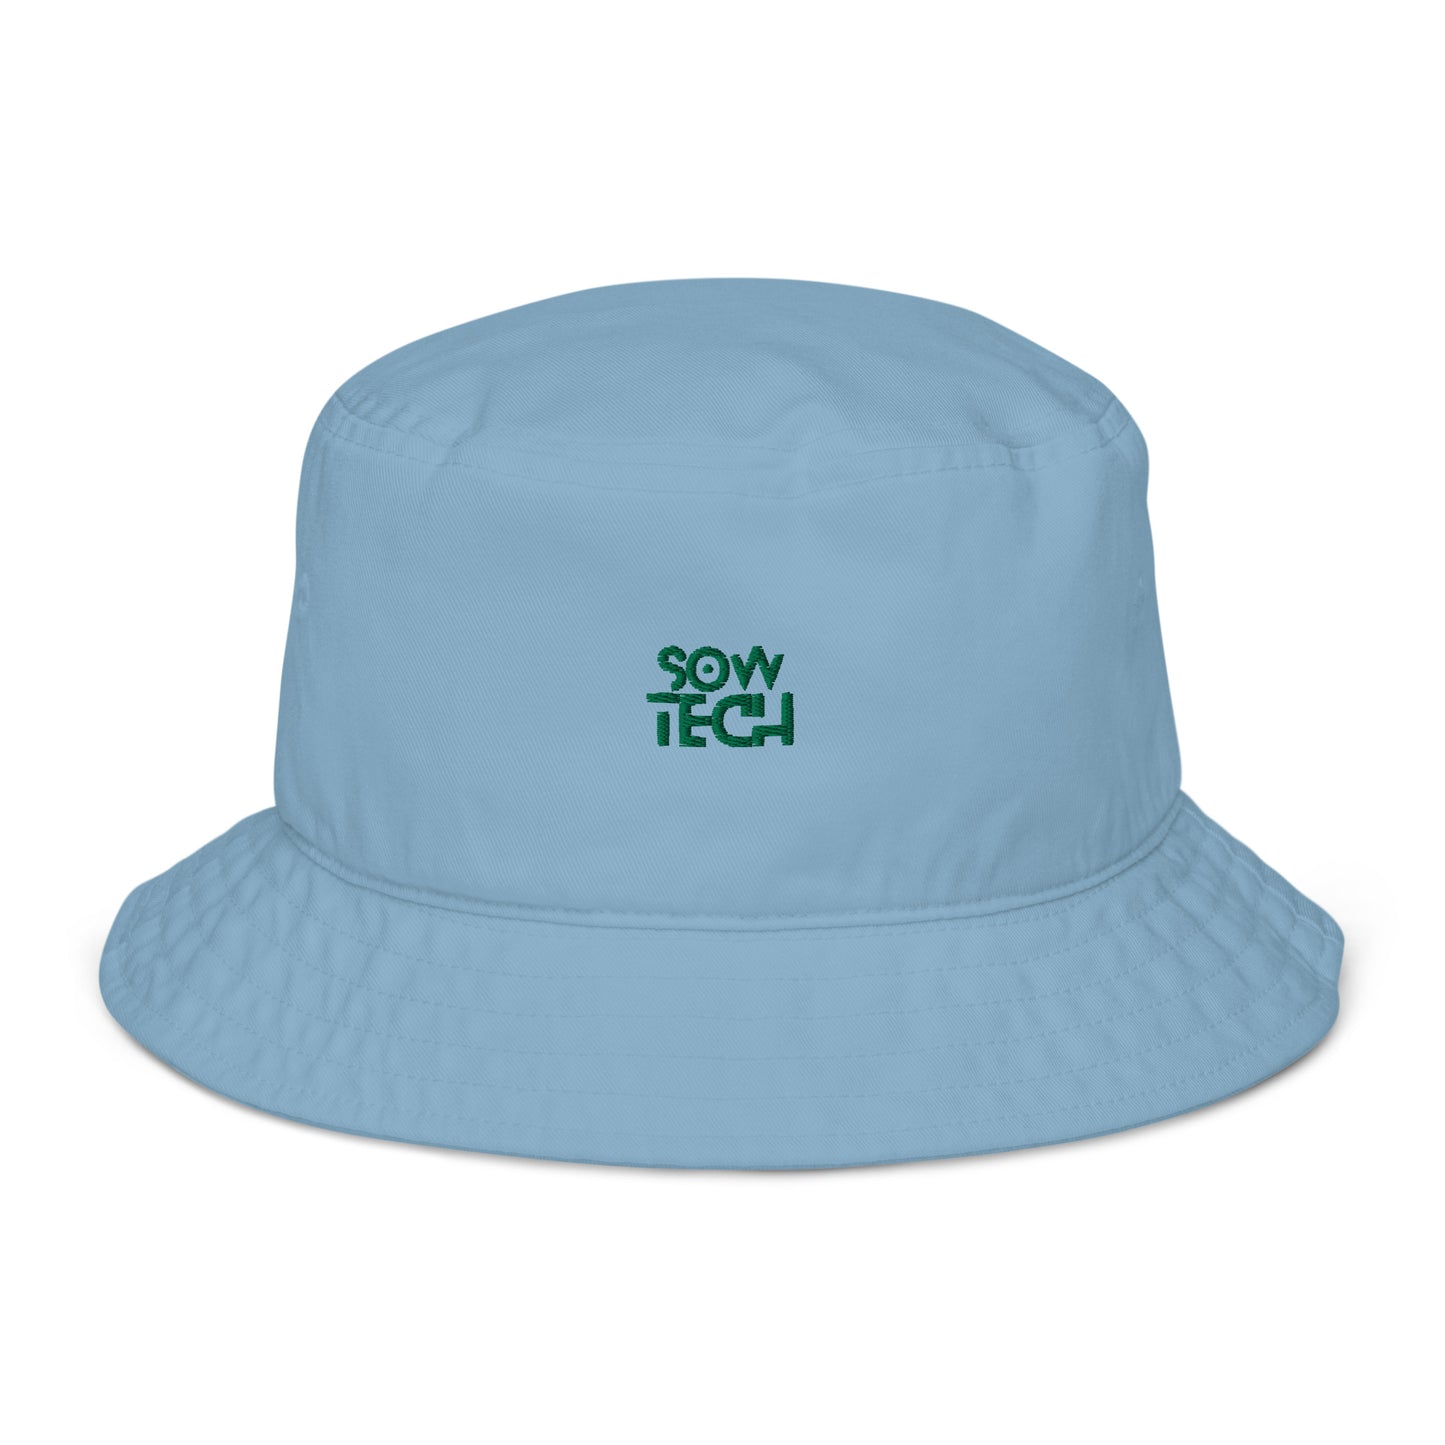 Organic field hat